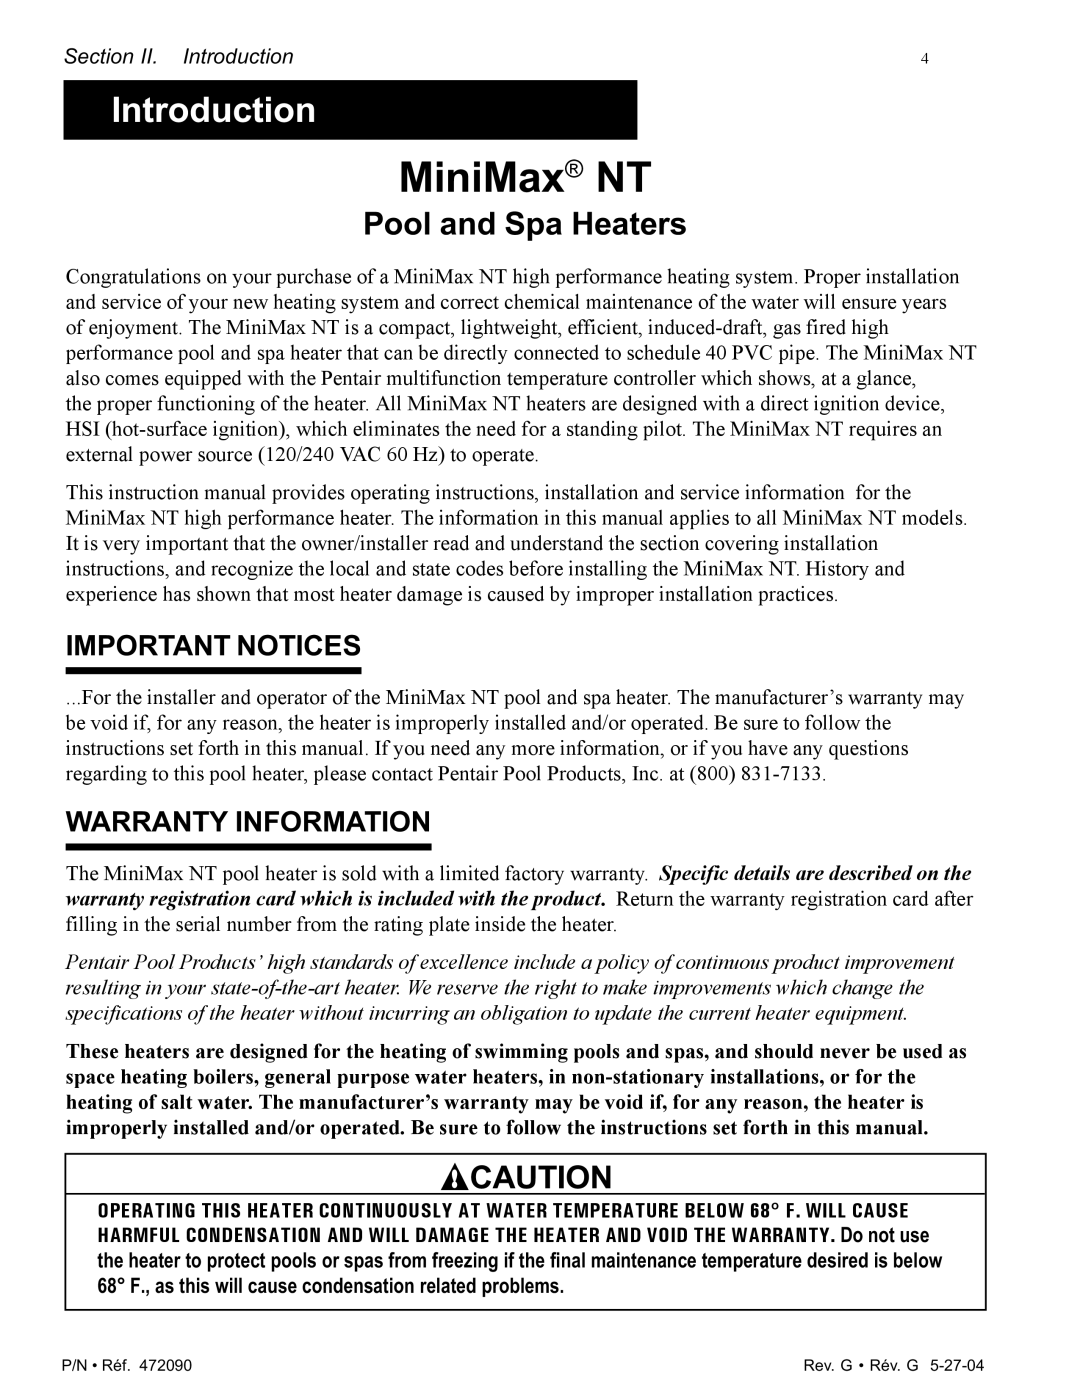 Pentair 200 installation manual Important Notices, Warranty Information 